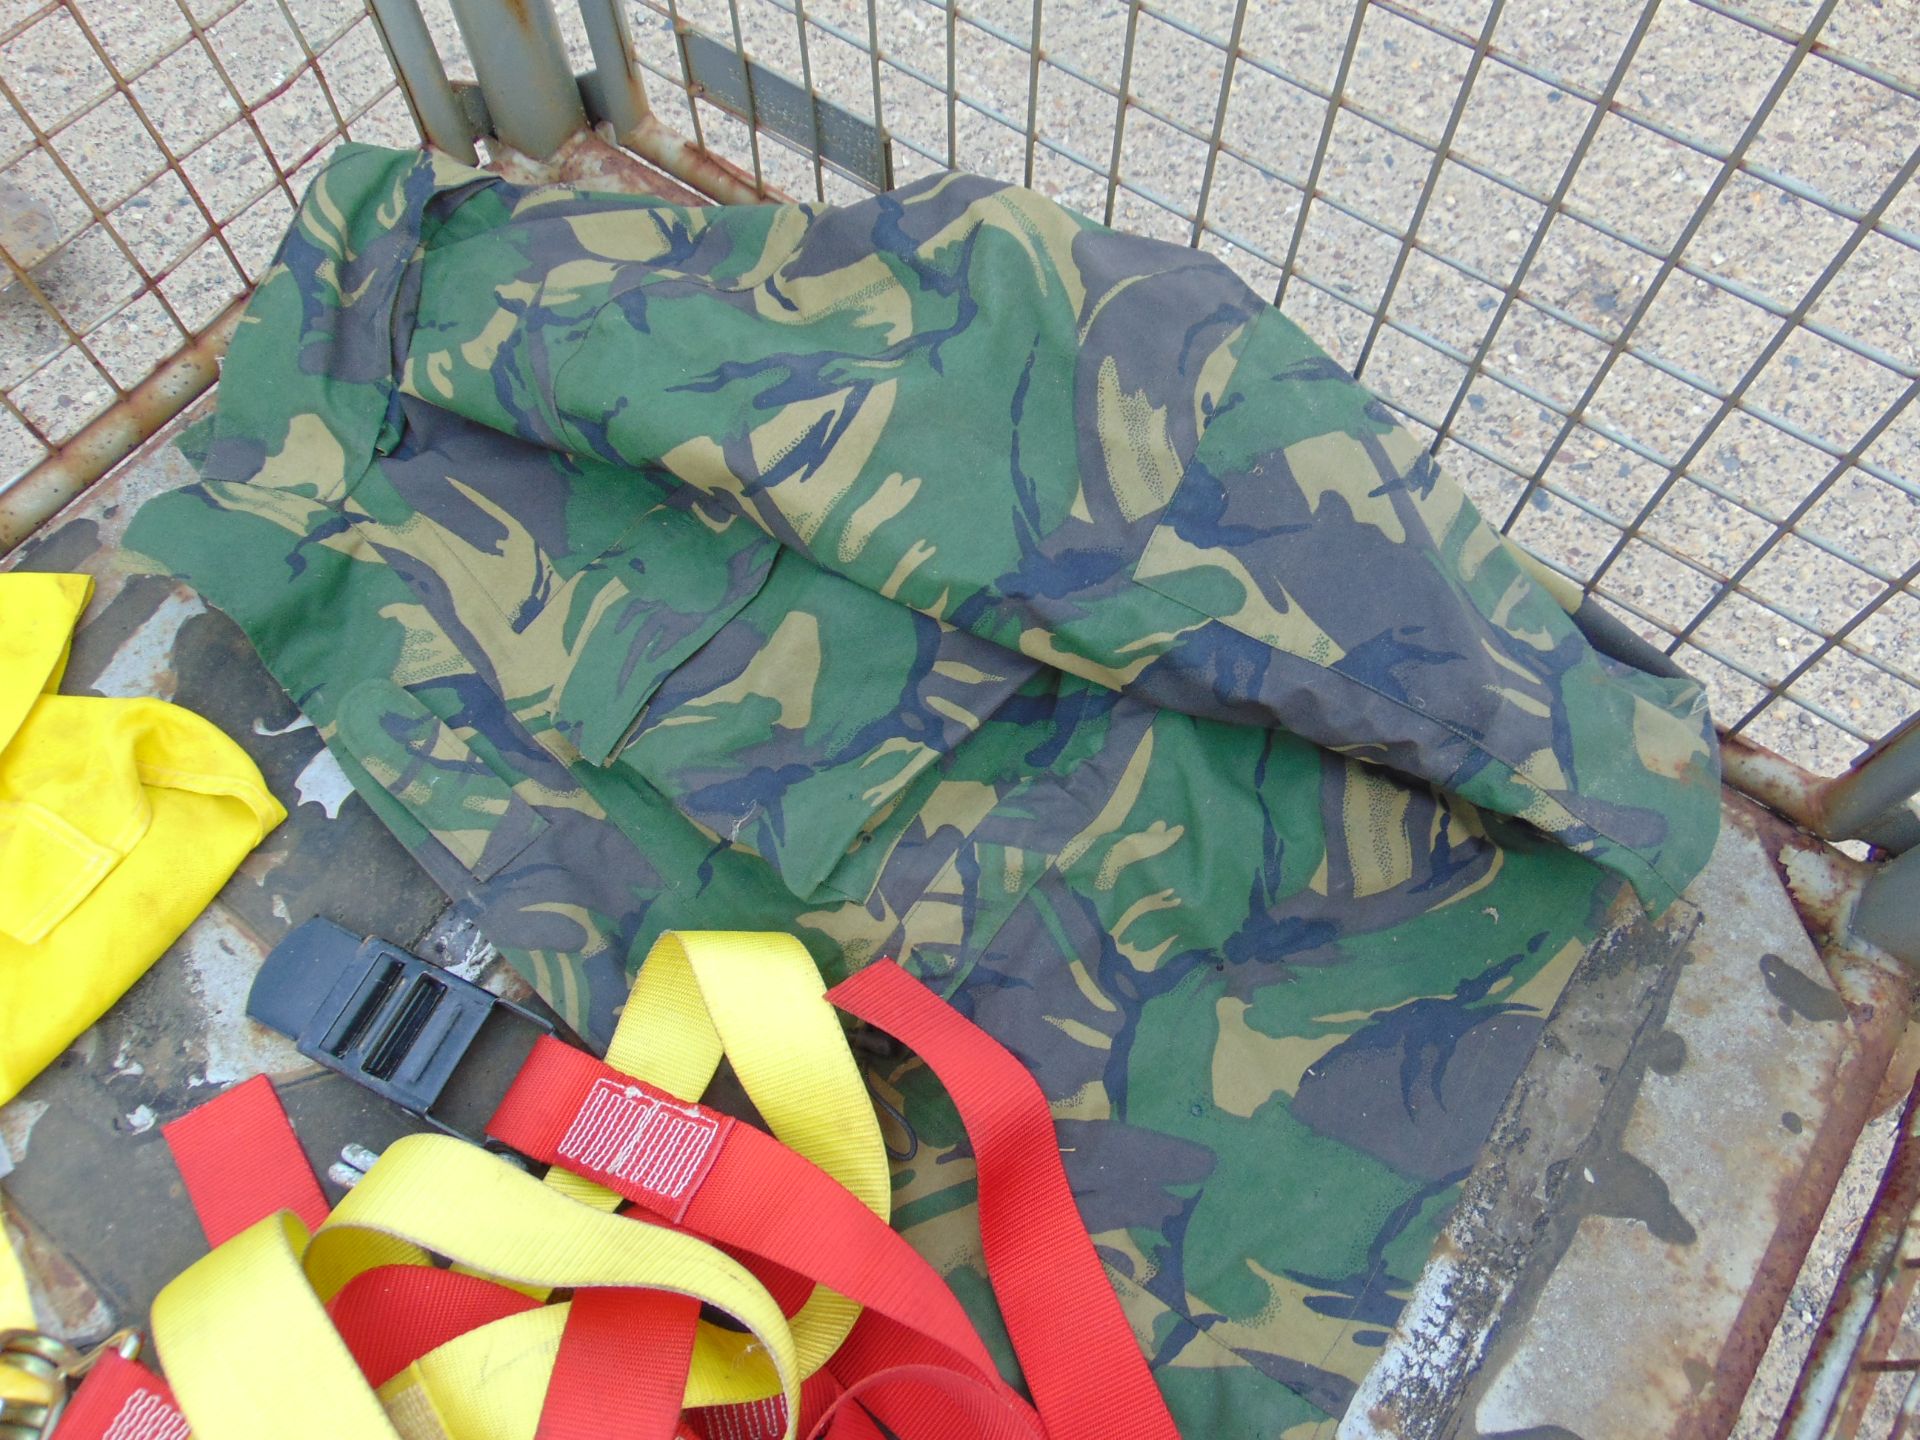 Camouflage Jacket, Convoy Flags, Straps etc - Image 2 of 5